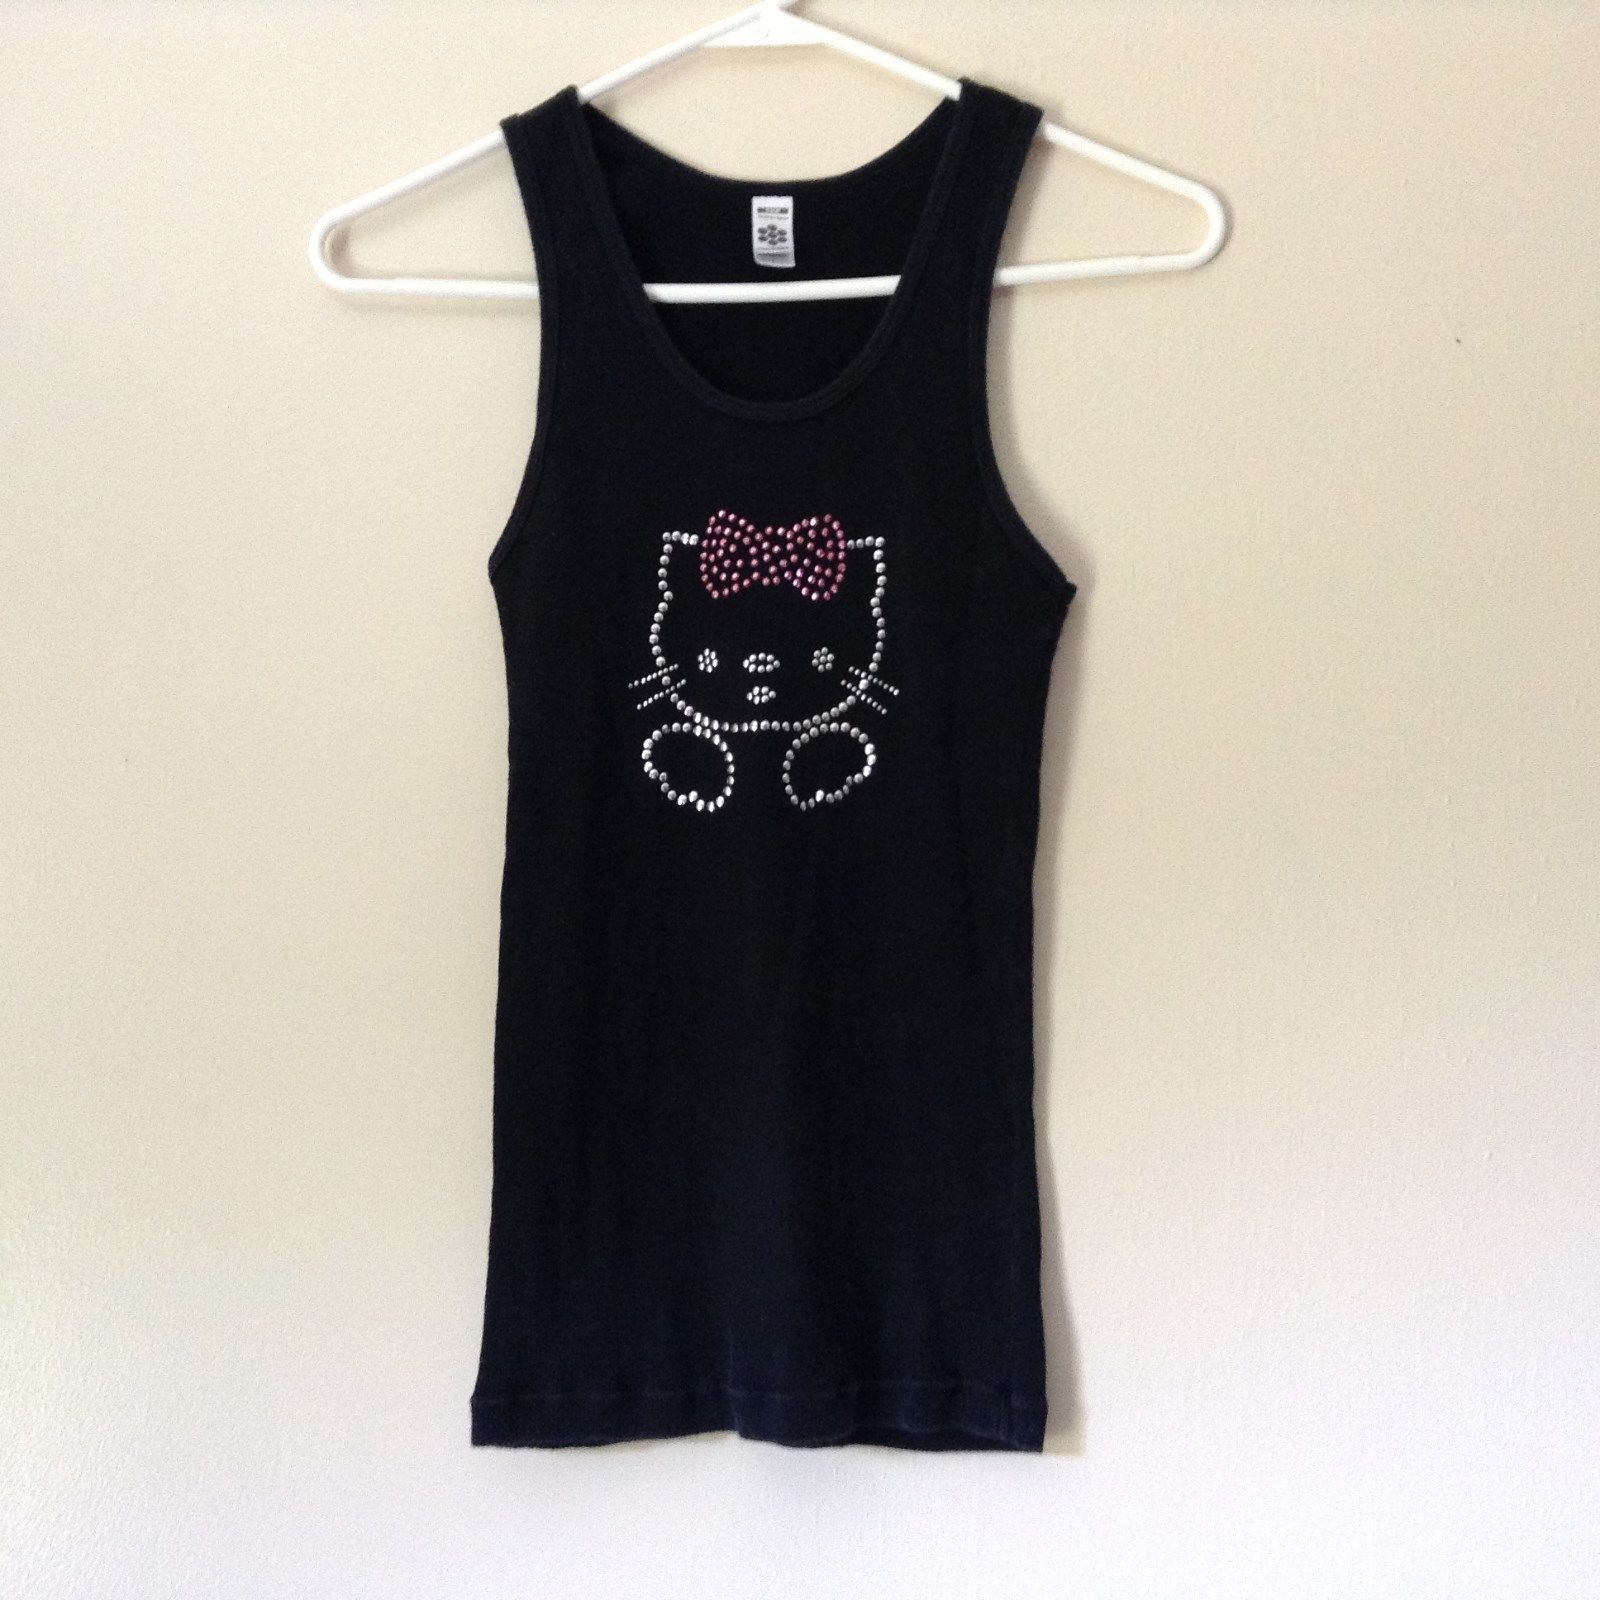 American Apparel Classic Girl Hello Kitty Black Tank Top Size Large - $39.99